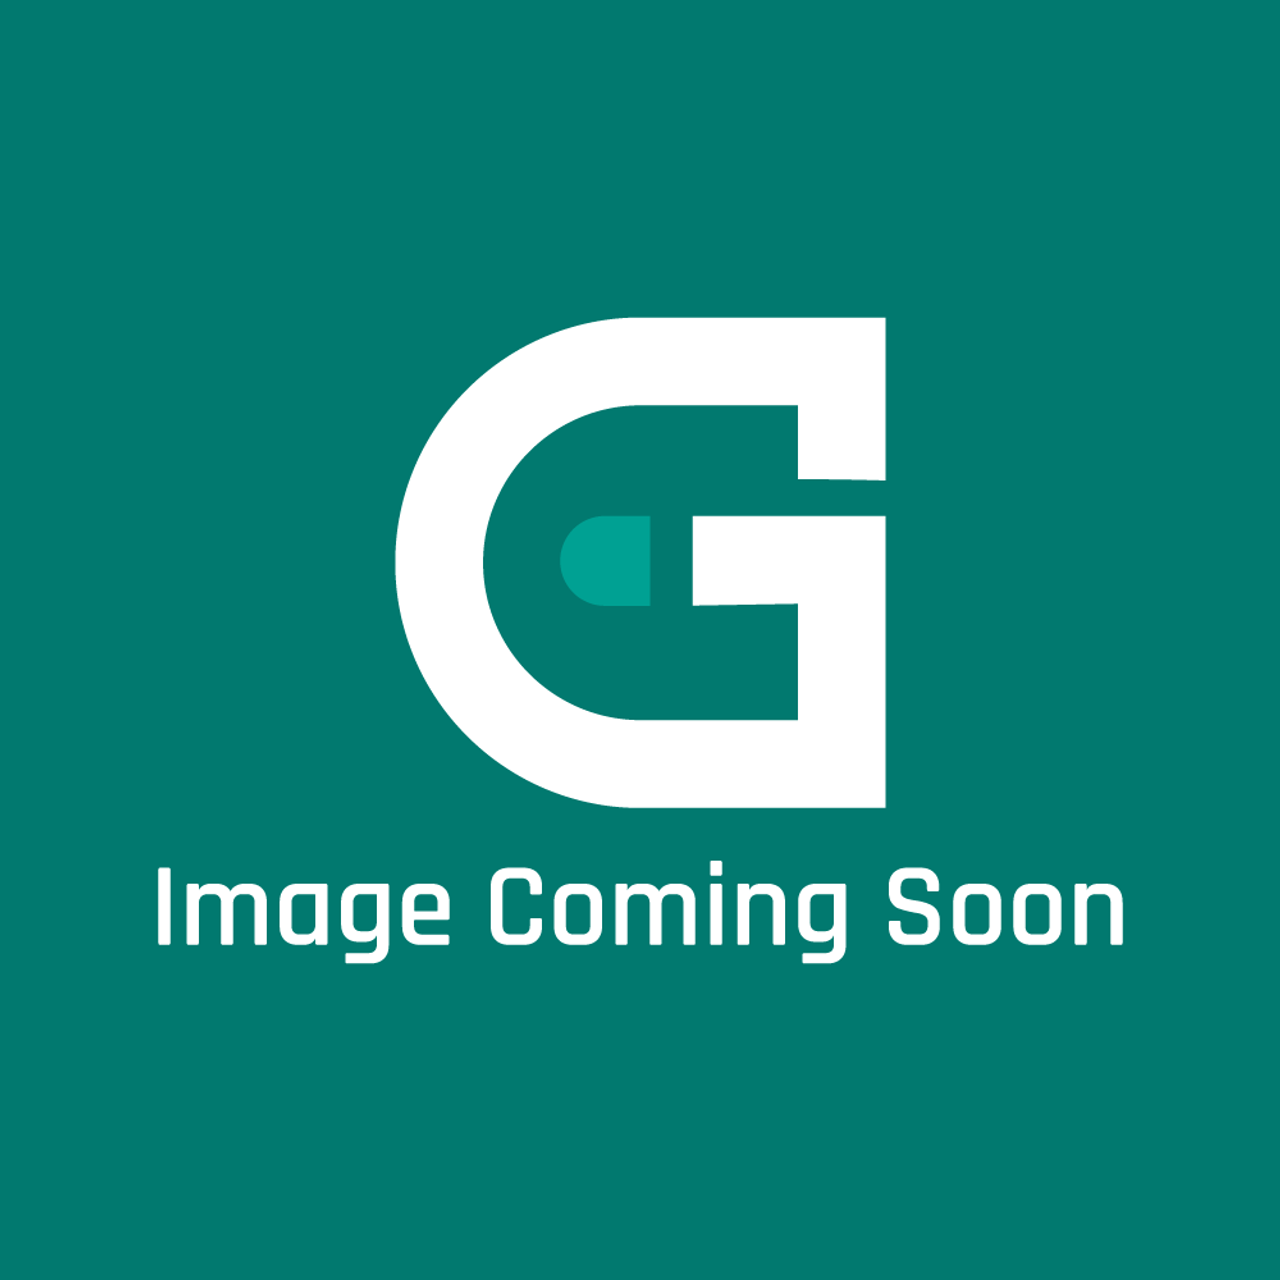 GE Appliances WD01X34281 - Wheels On Rail Bracket - Image Coming Soon!